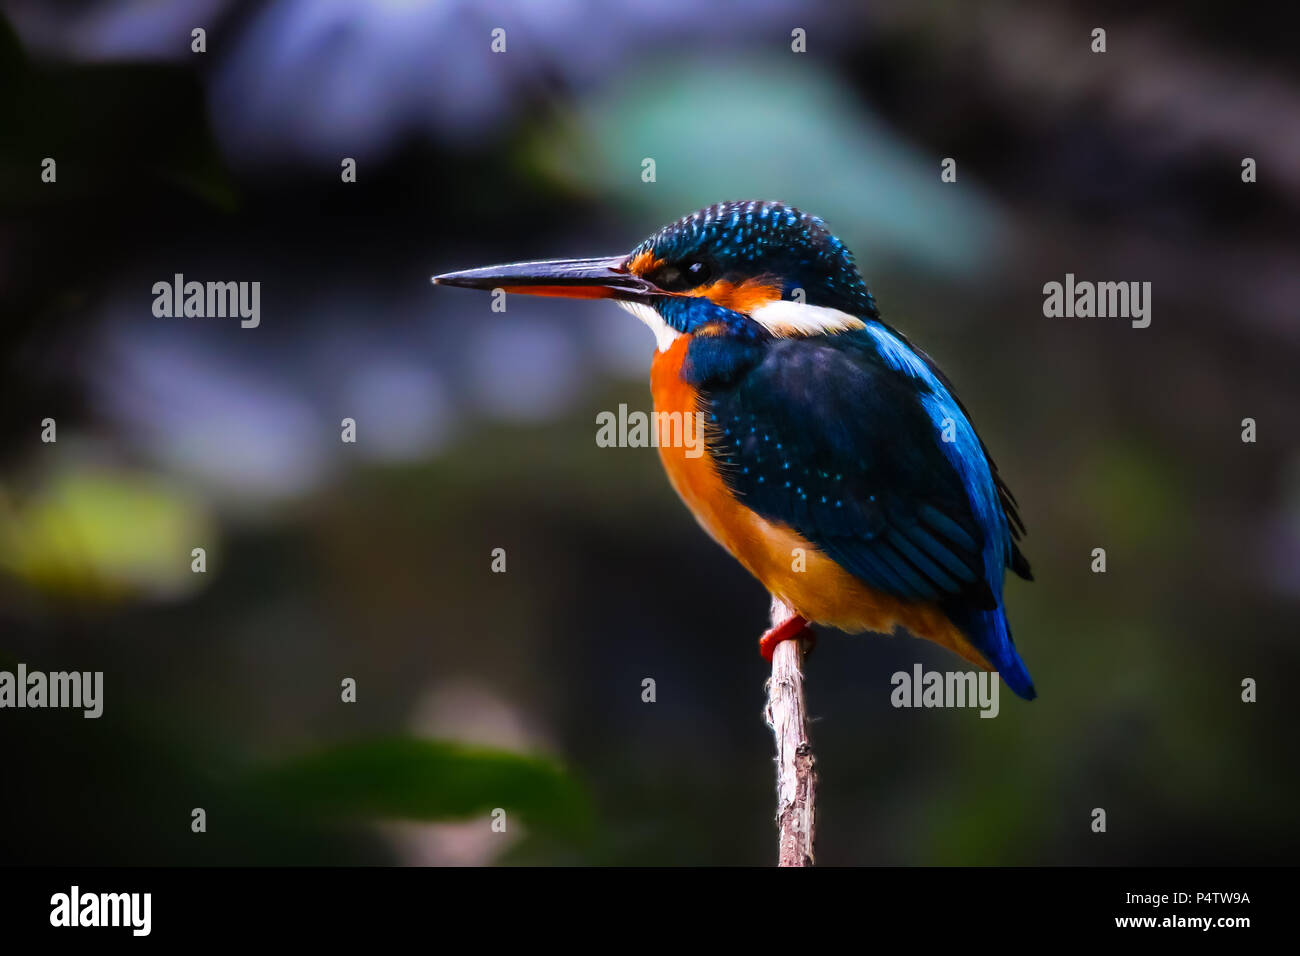 Bird Kingfisher Relaxing on a Brunch Stock Photo